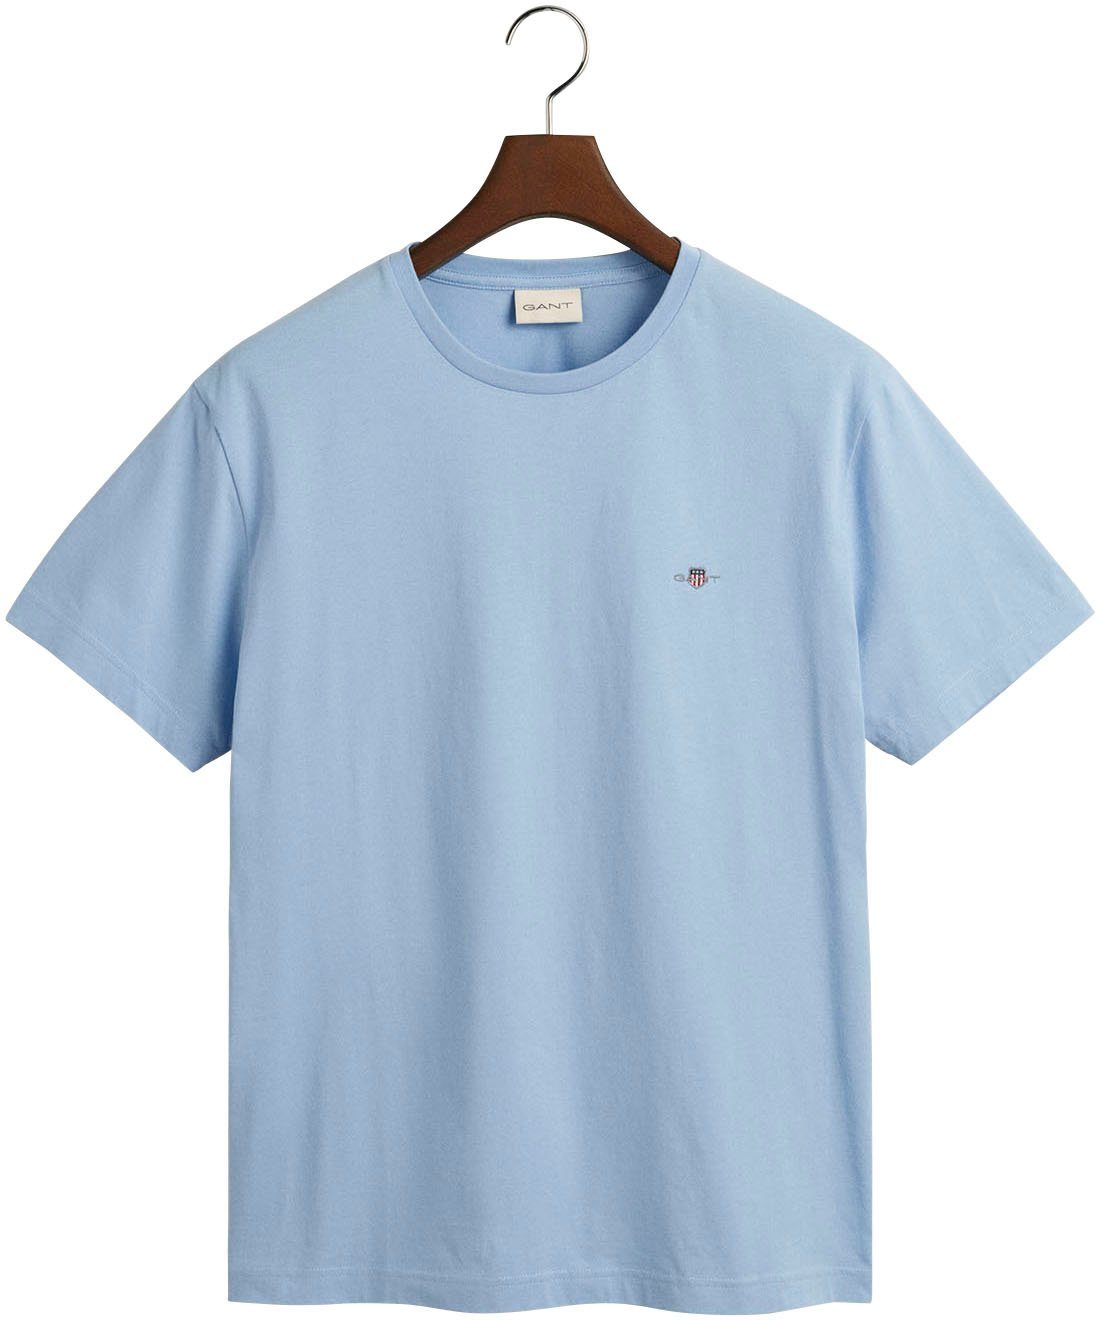 Brust SS auf capri REG T-SHIRT blue Gant SHIELD der Logostickerei mit T-Shirt